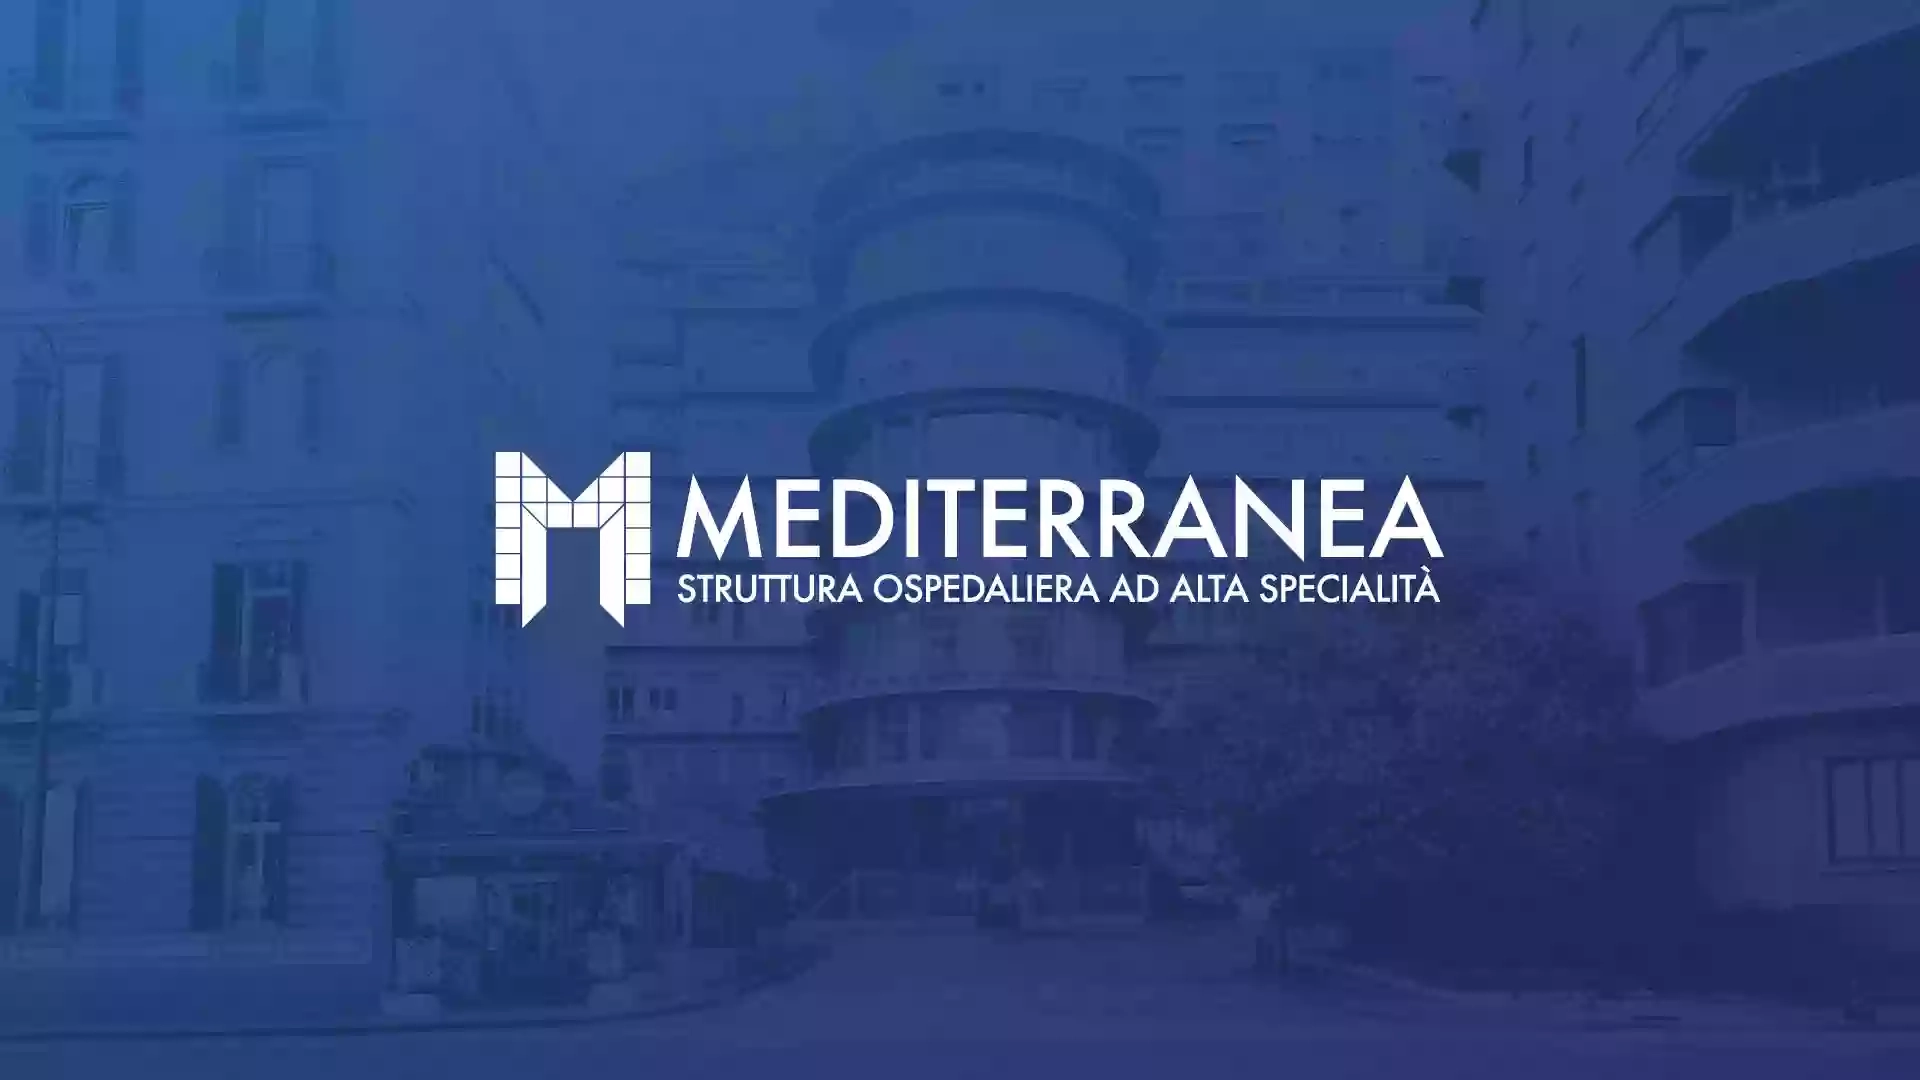 Clinica Mediterranea - Ospedale e Centro Diagnostico